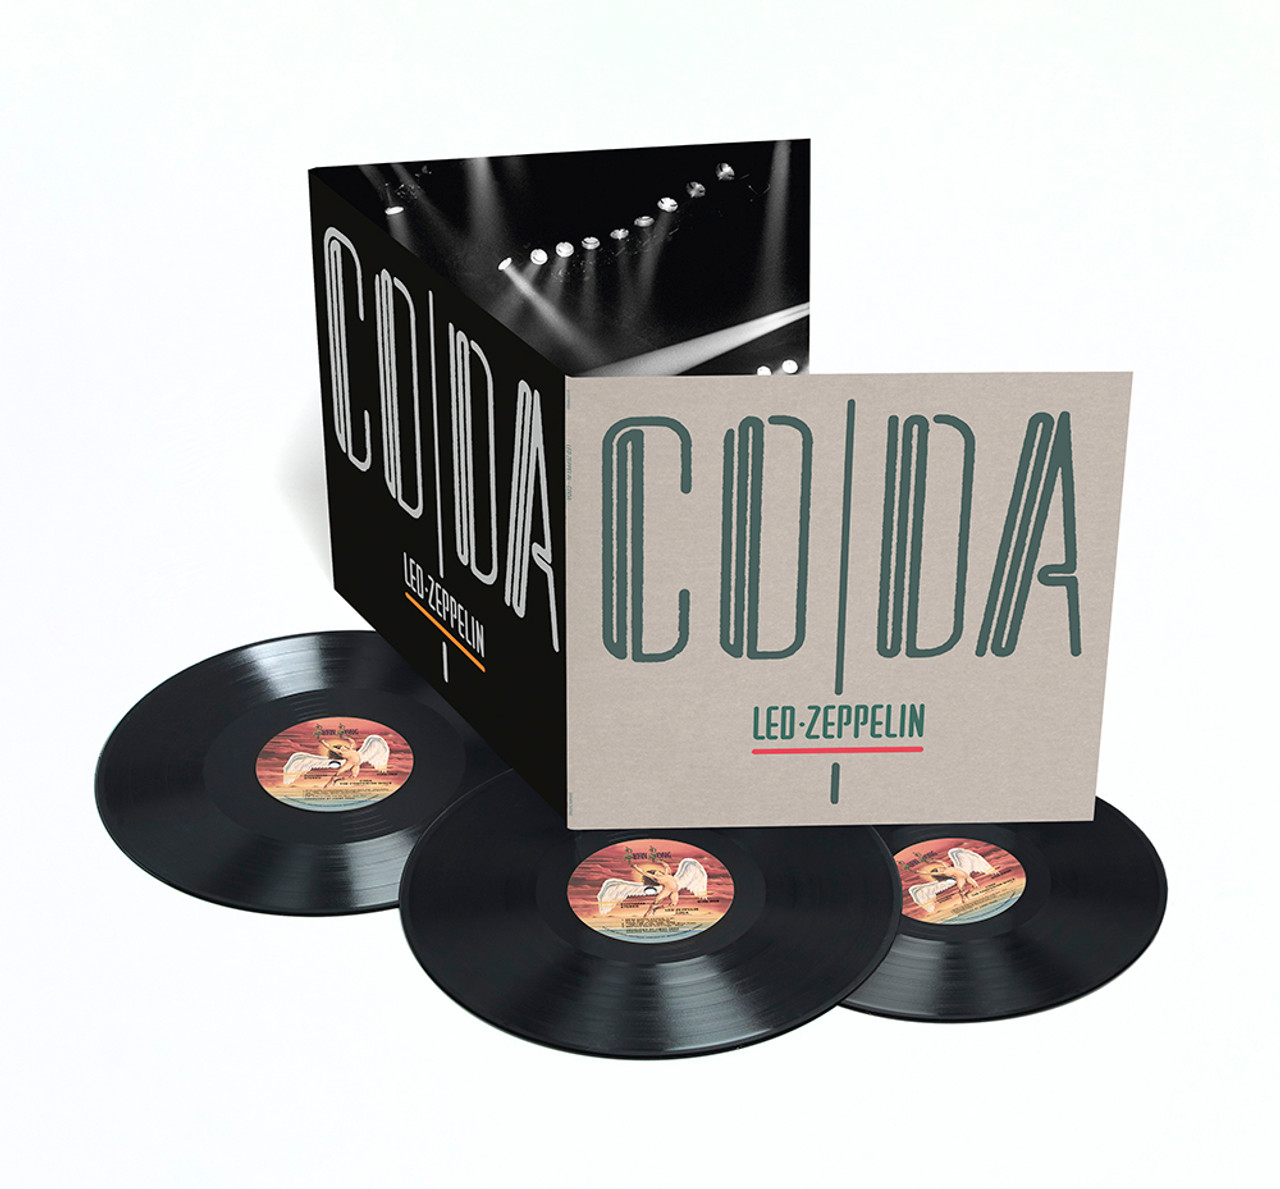 Led Zeppelin - Coda [Current Pressing] LP Vinyl Record Album [New Sealed]  180g